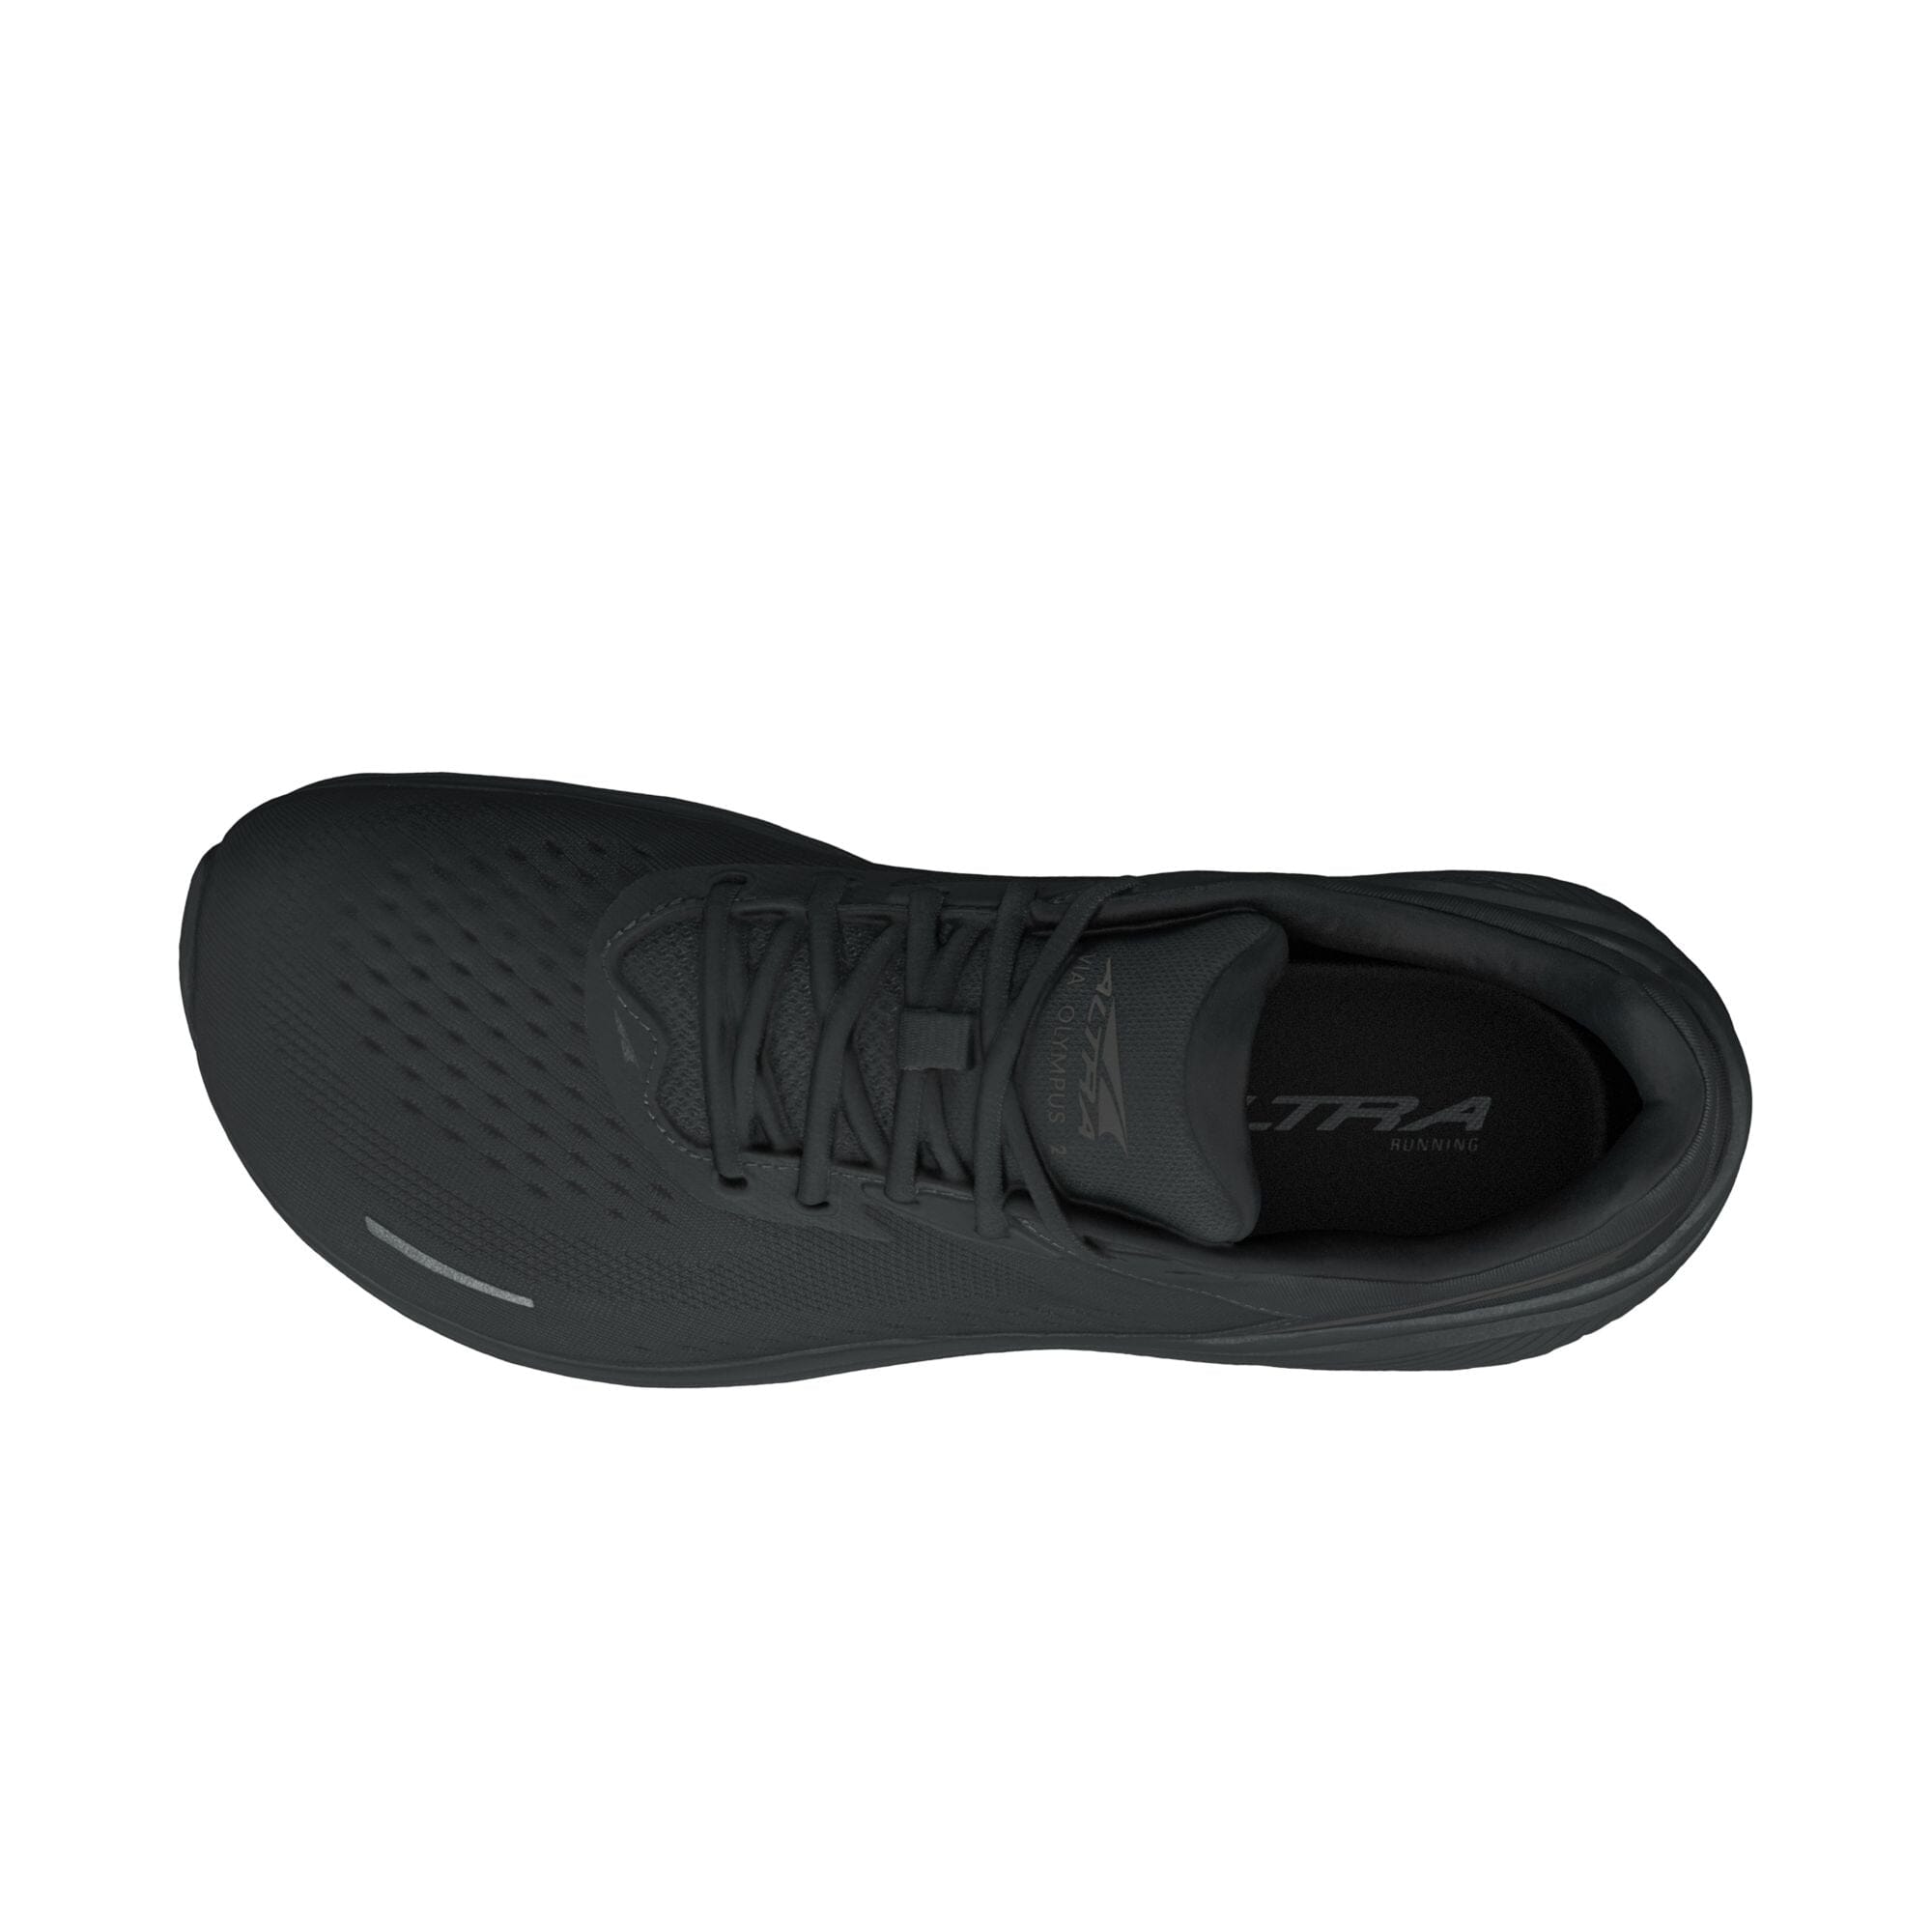 Altra Men's VIA Olympus 2 Road Running Shoes 